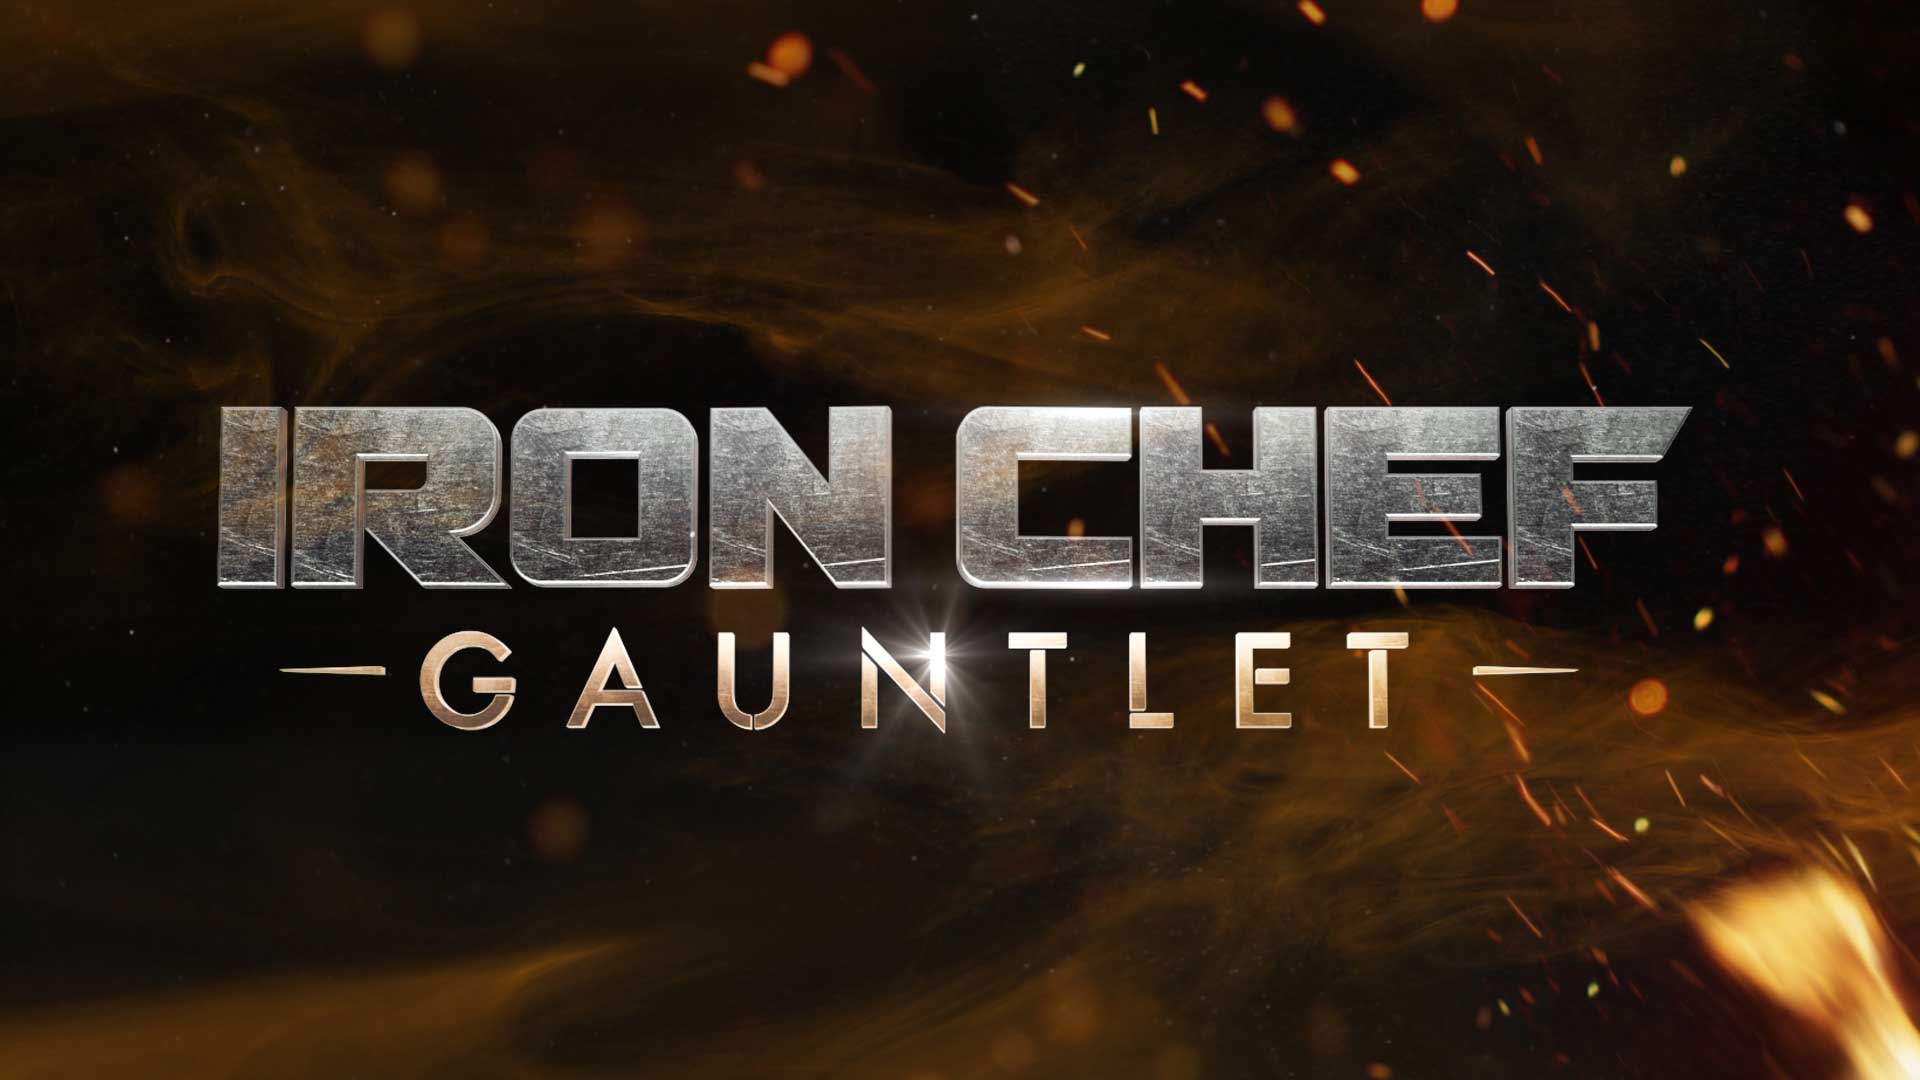 Iron Chef Gauntlet - Season 1